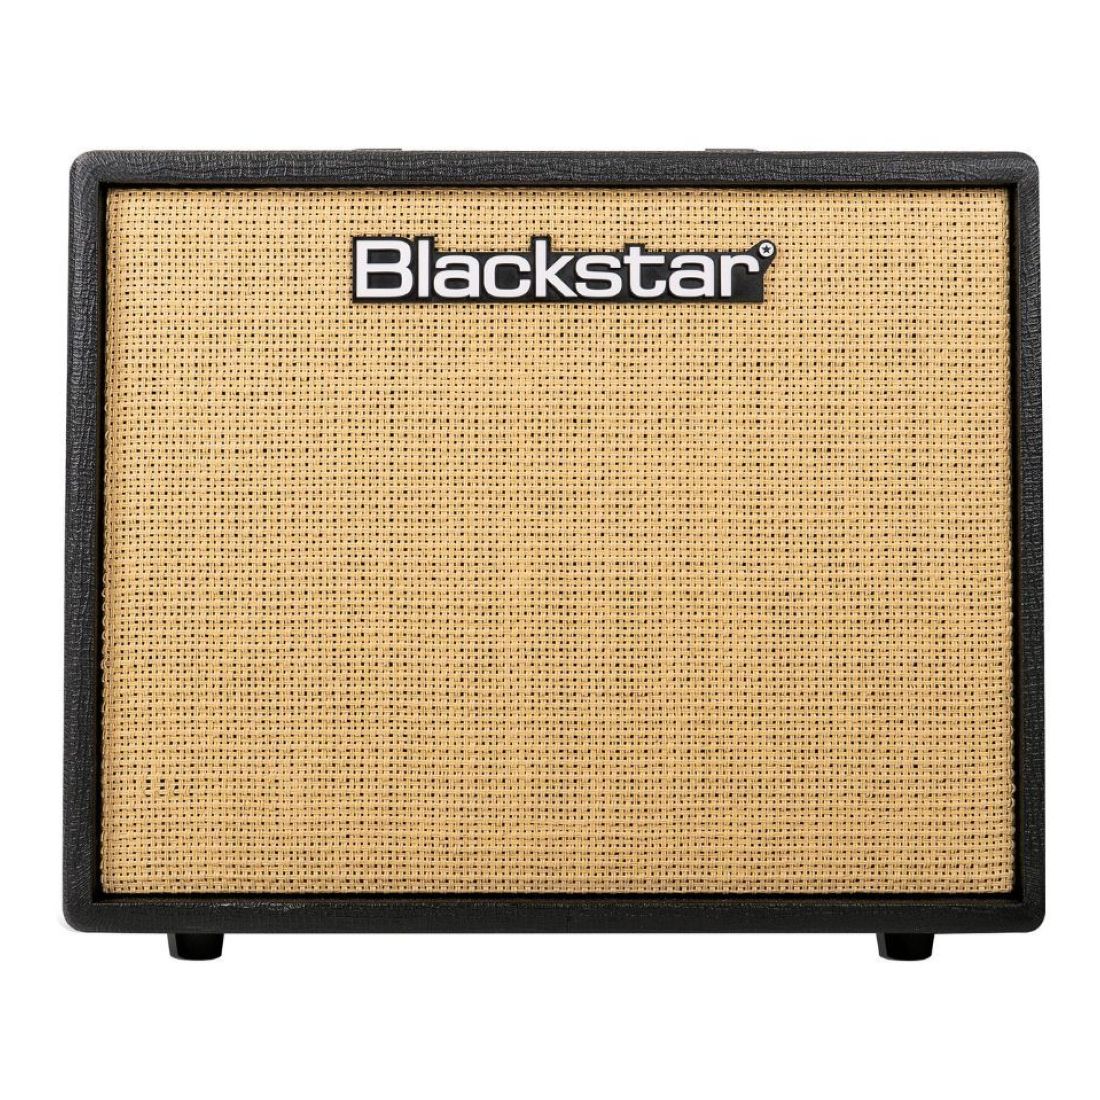 Blackstar Debut-50R 50-Watt Combo Guitar Amplifier - Black